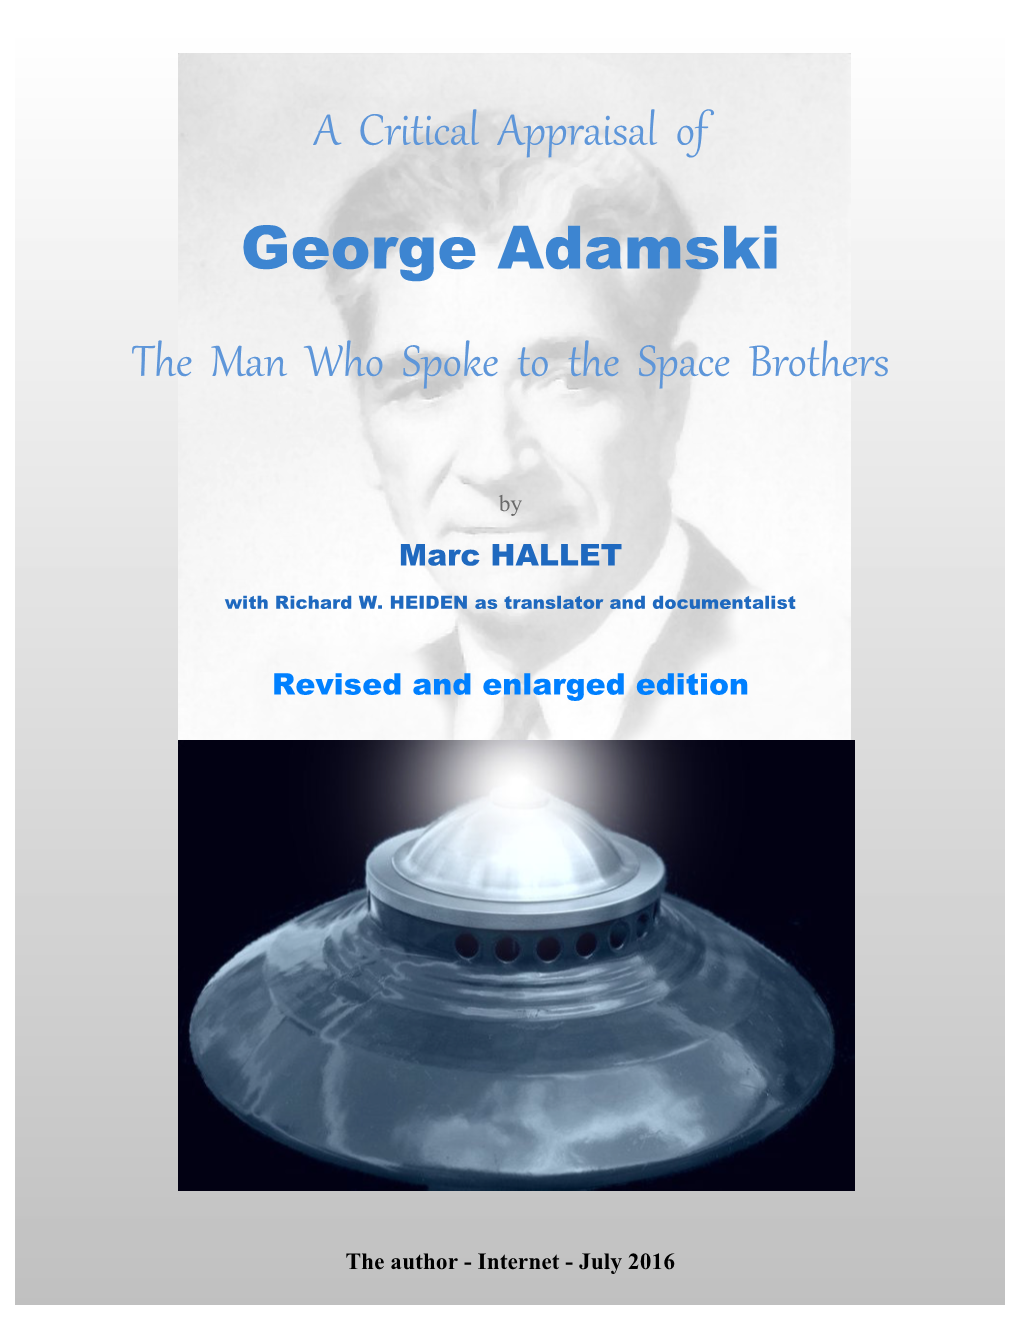 A Critical Appraisal of George Adamski